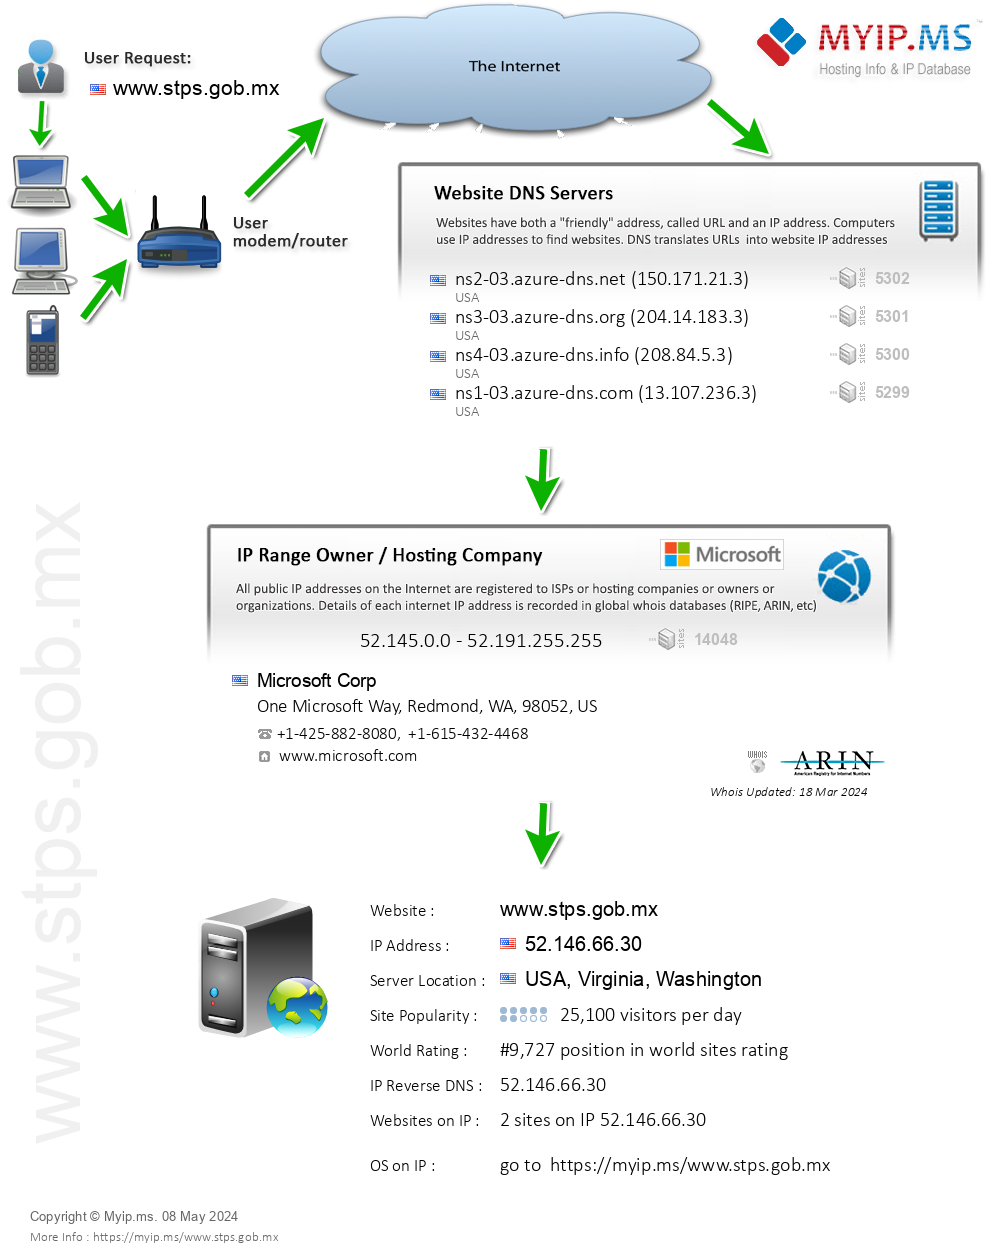 Stps.gob.mx - Website Hosting Visual IP Diagram